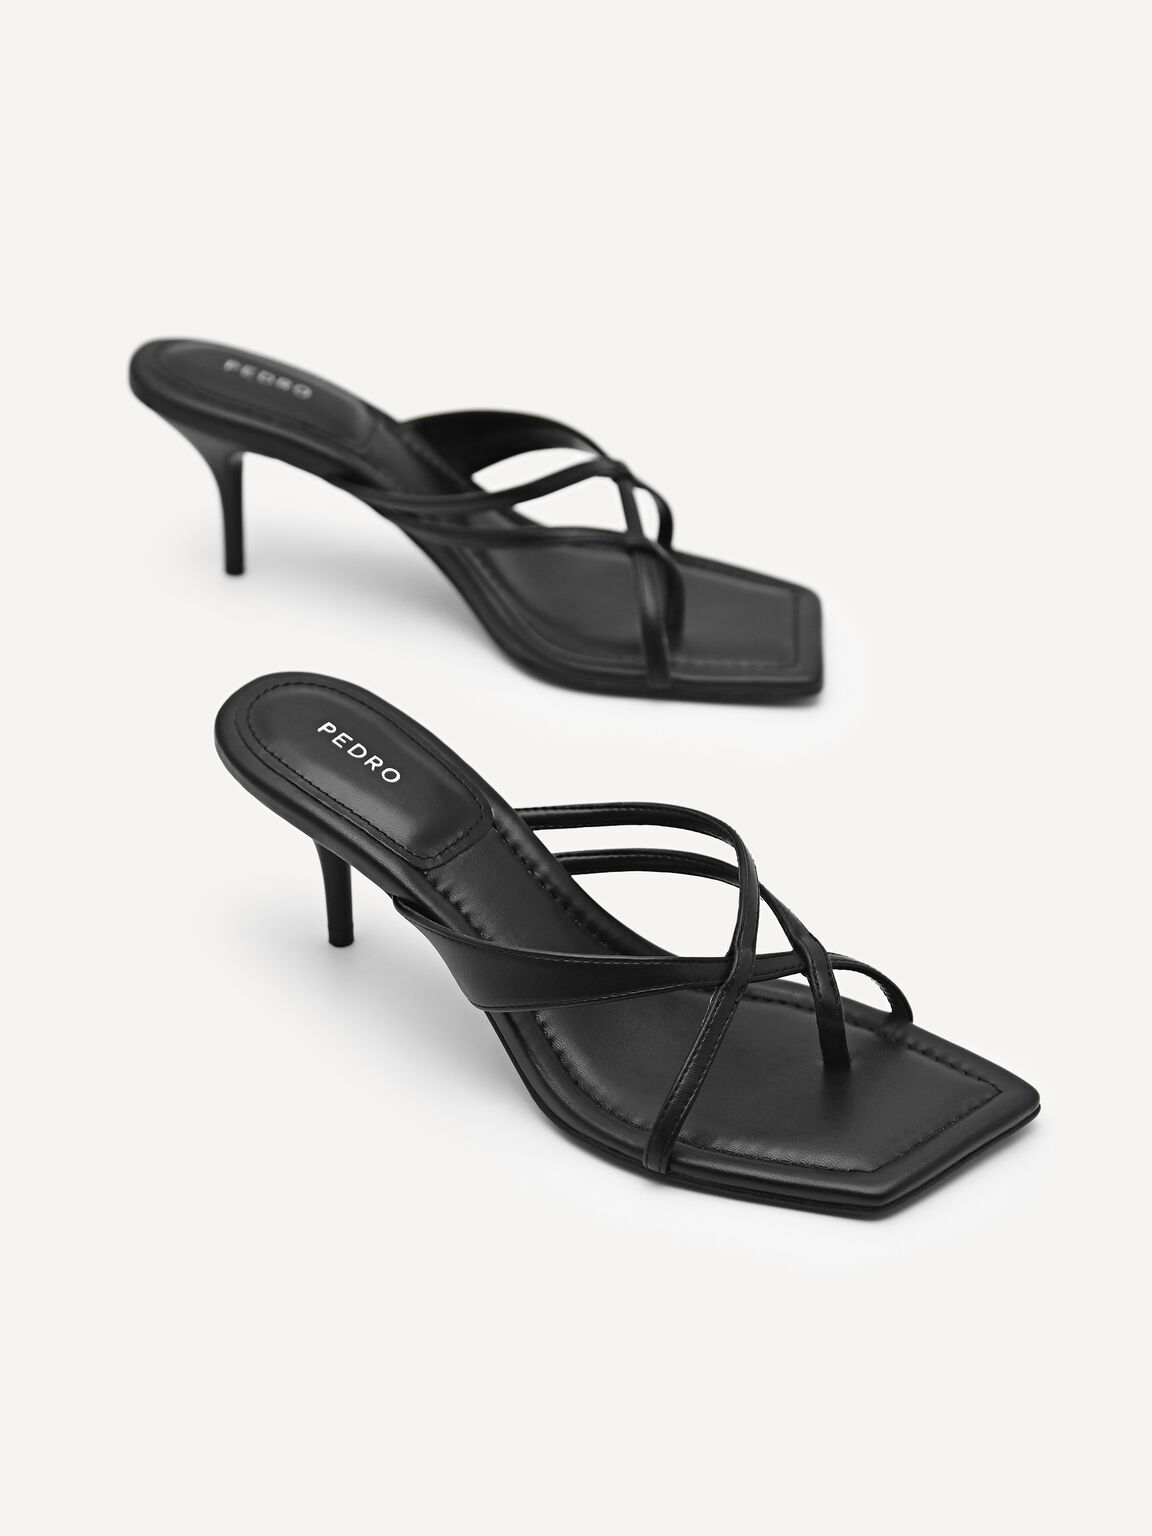 Dessau Heeled Sandals, Black